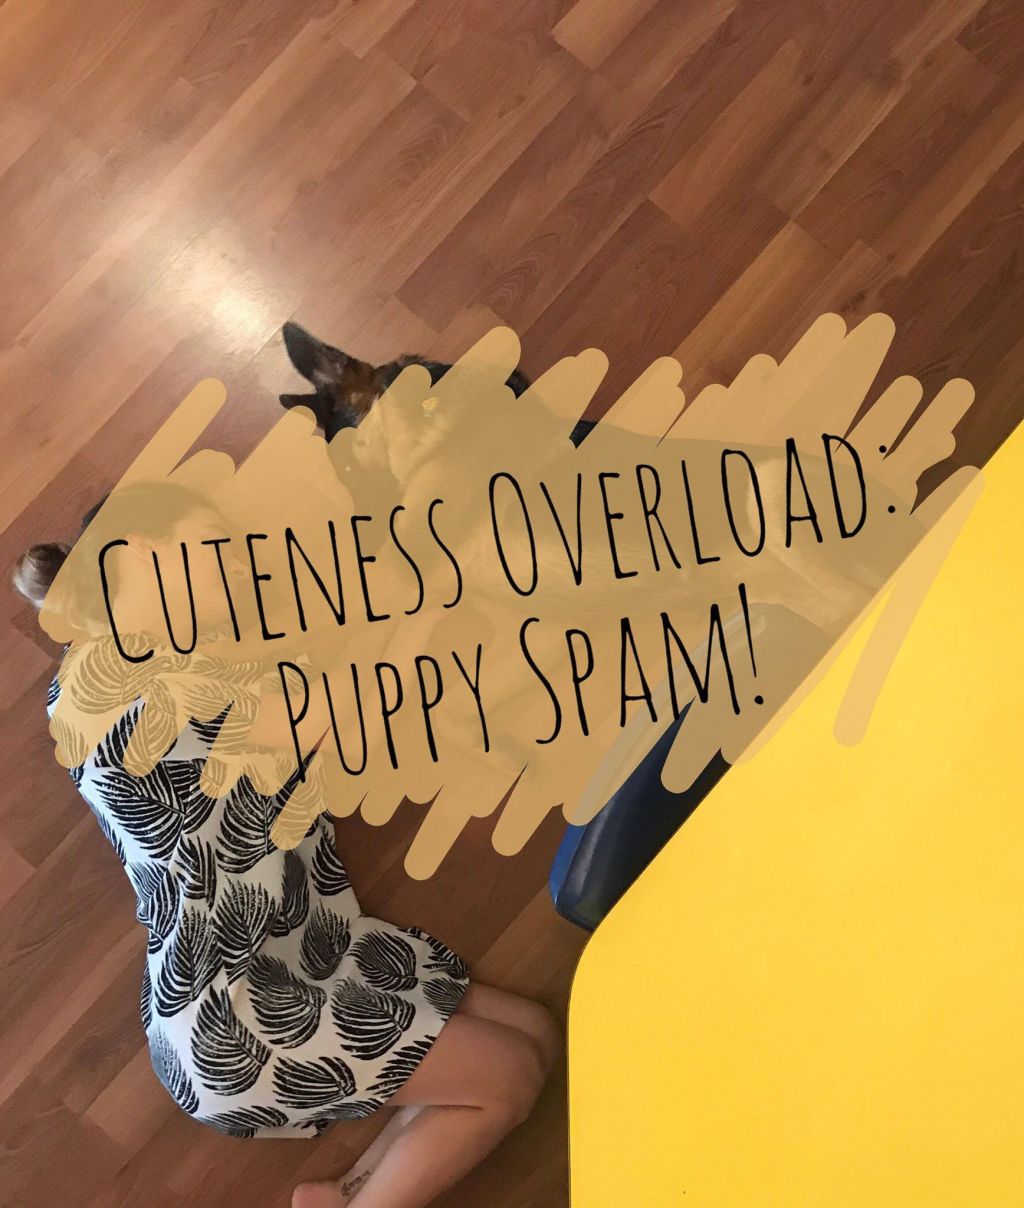 Cuteness Overload: Puppy Spam!